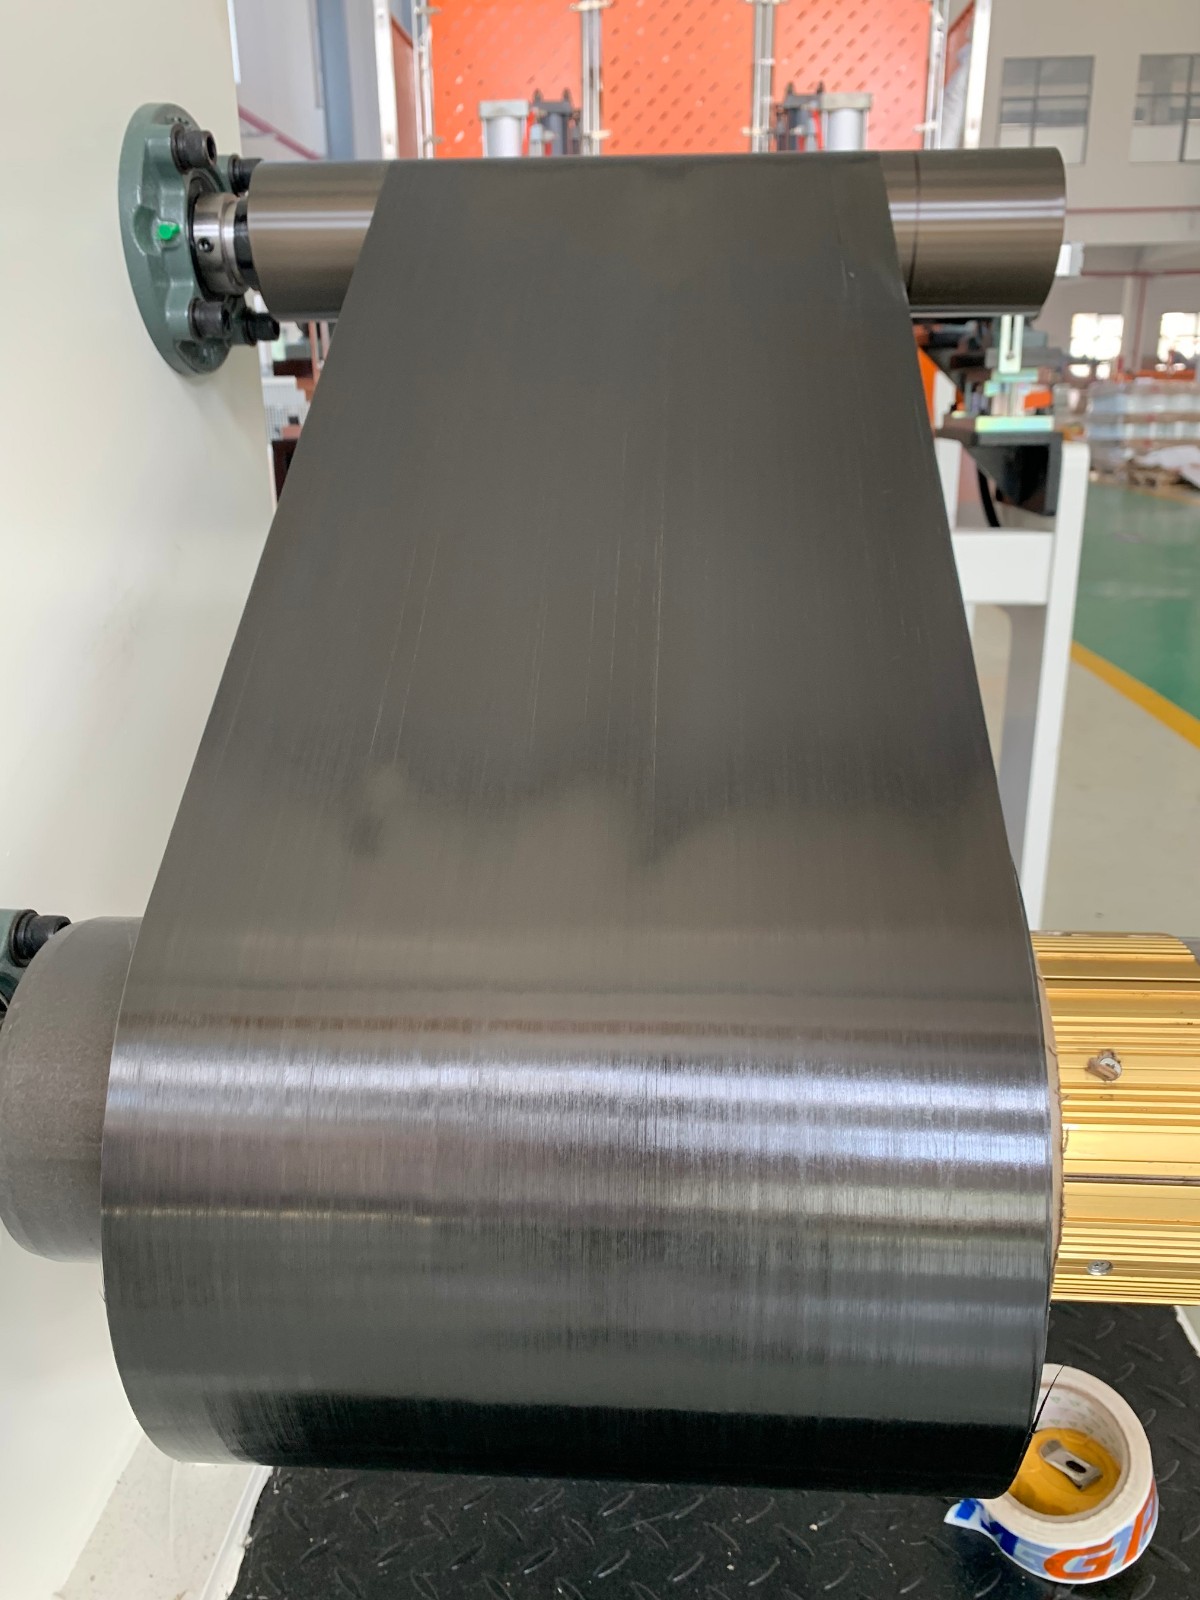 Wet Powder Impregnation/Continuous Carbon Fiber Reinforced Thermoplastic UD-tape Production Line